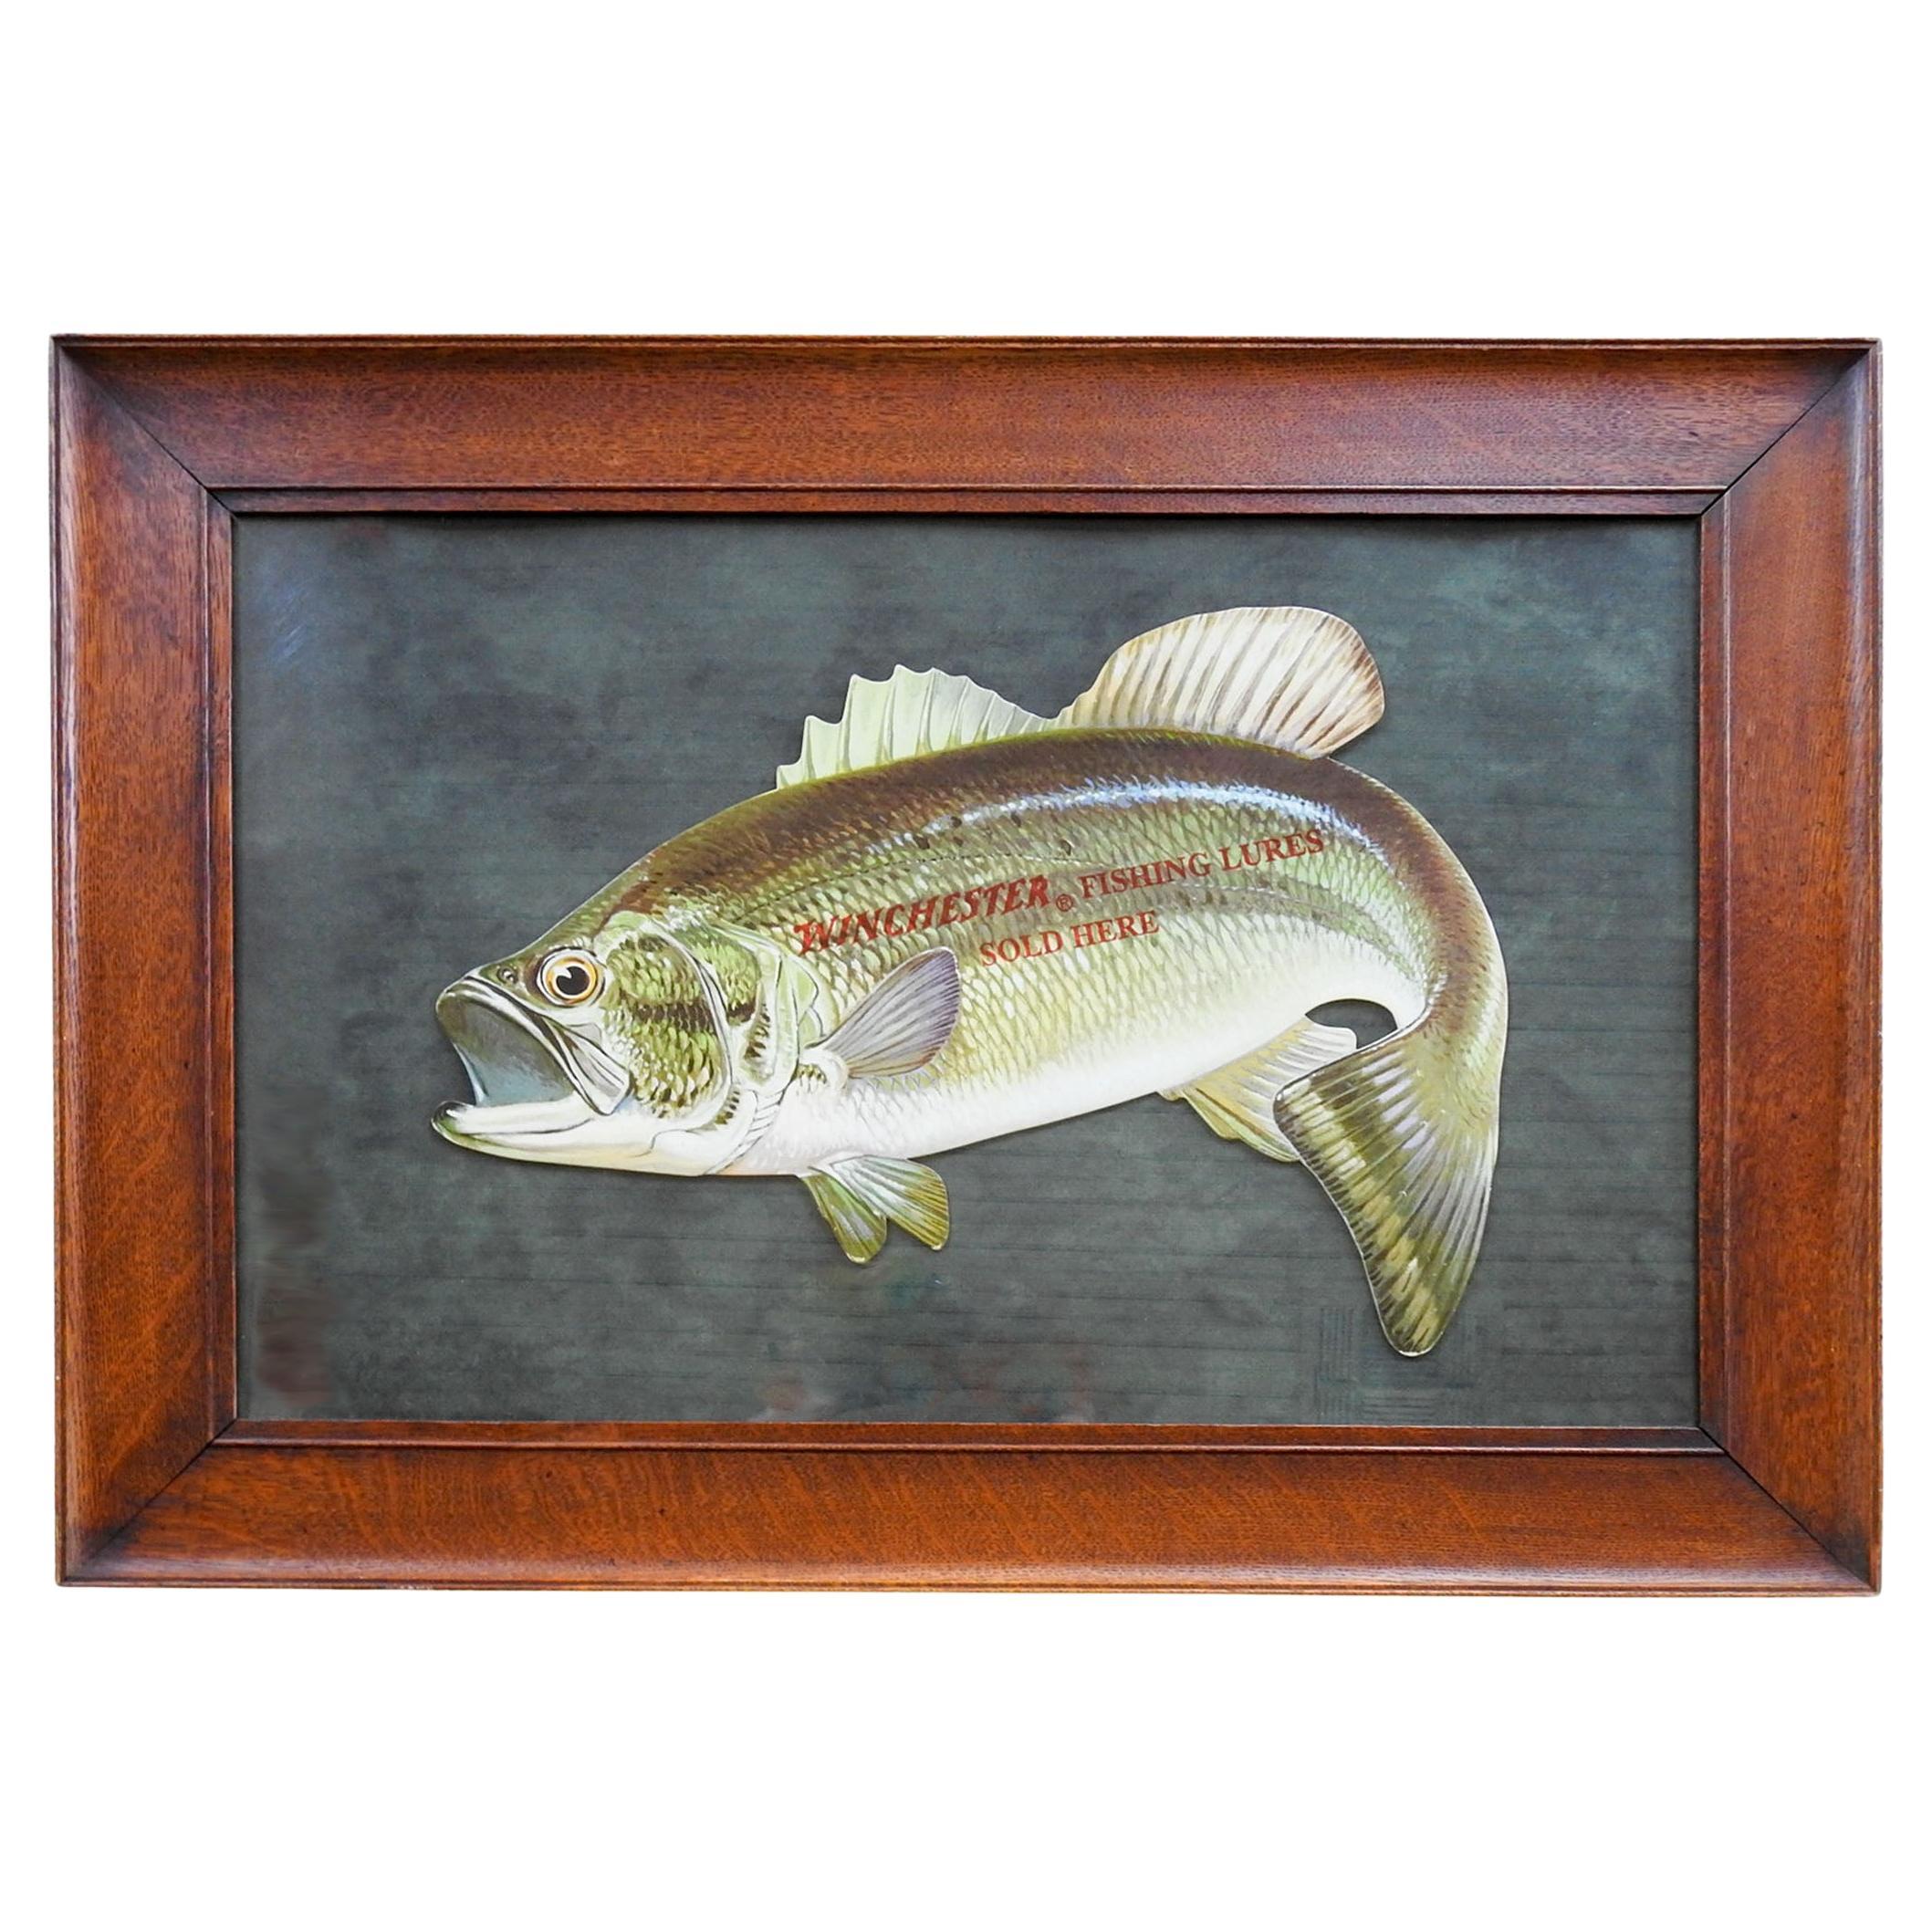 Fishing Lure Display - 2 For Sale on 1stDibs